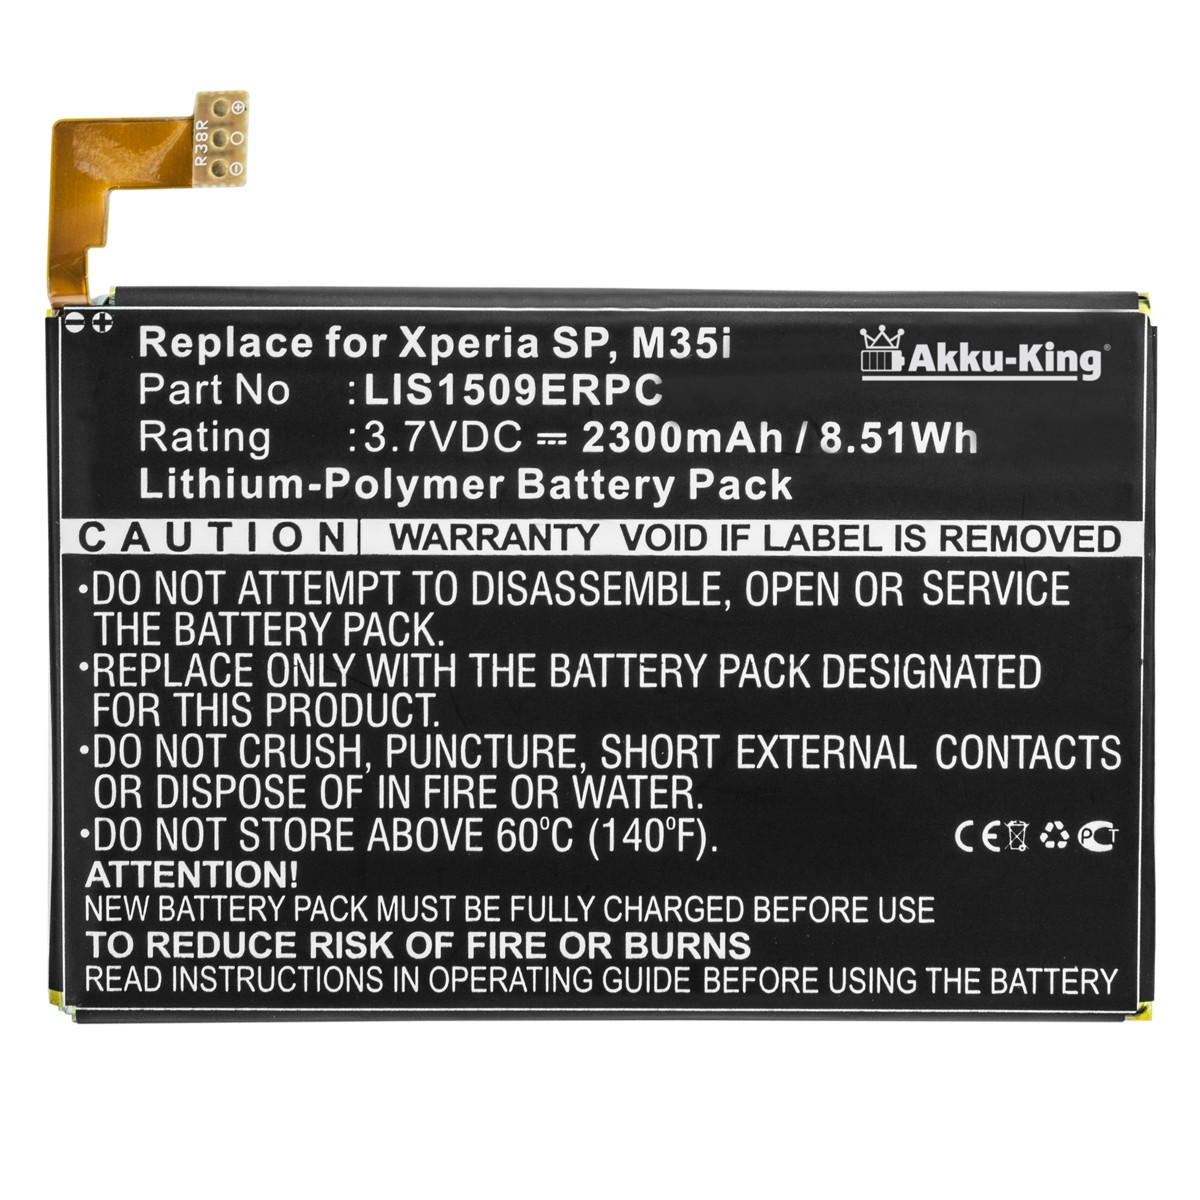 Sony-Ericsson kompatibel 3.7 mit Li-Polymer LIS1509ERPC 2300mAh Volt, Handy-Akku, AKKU-KING Akku